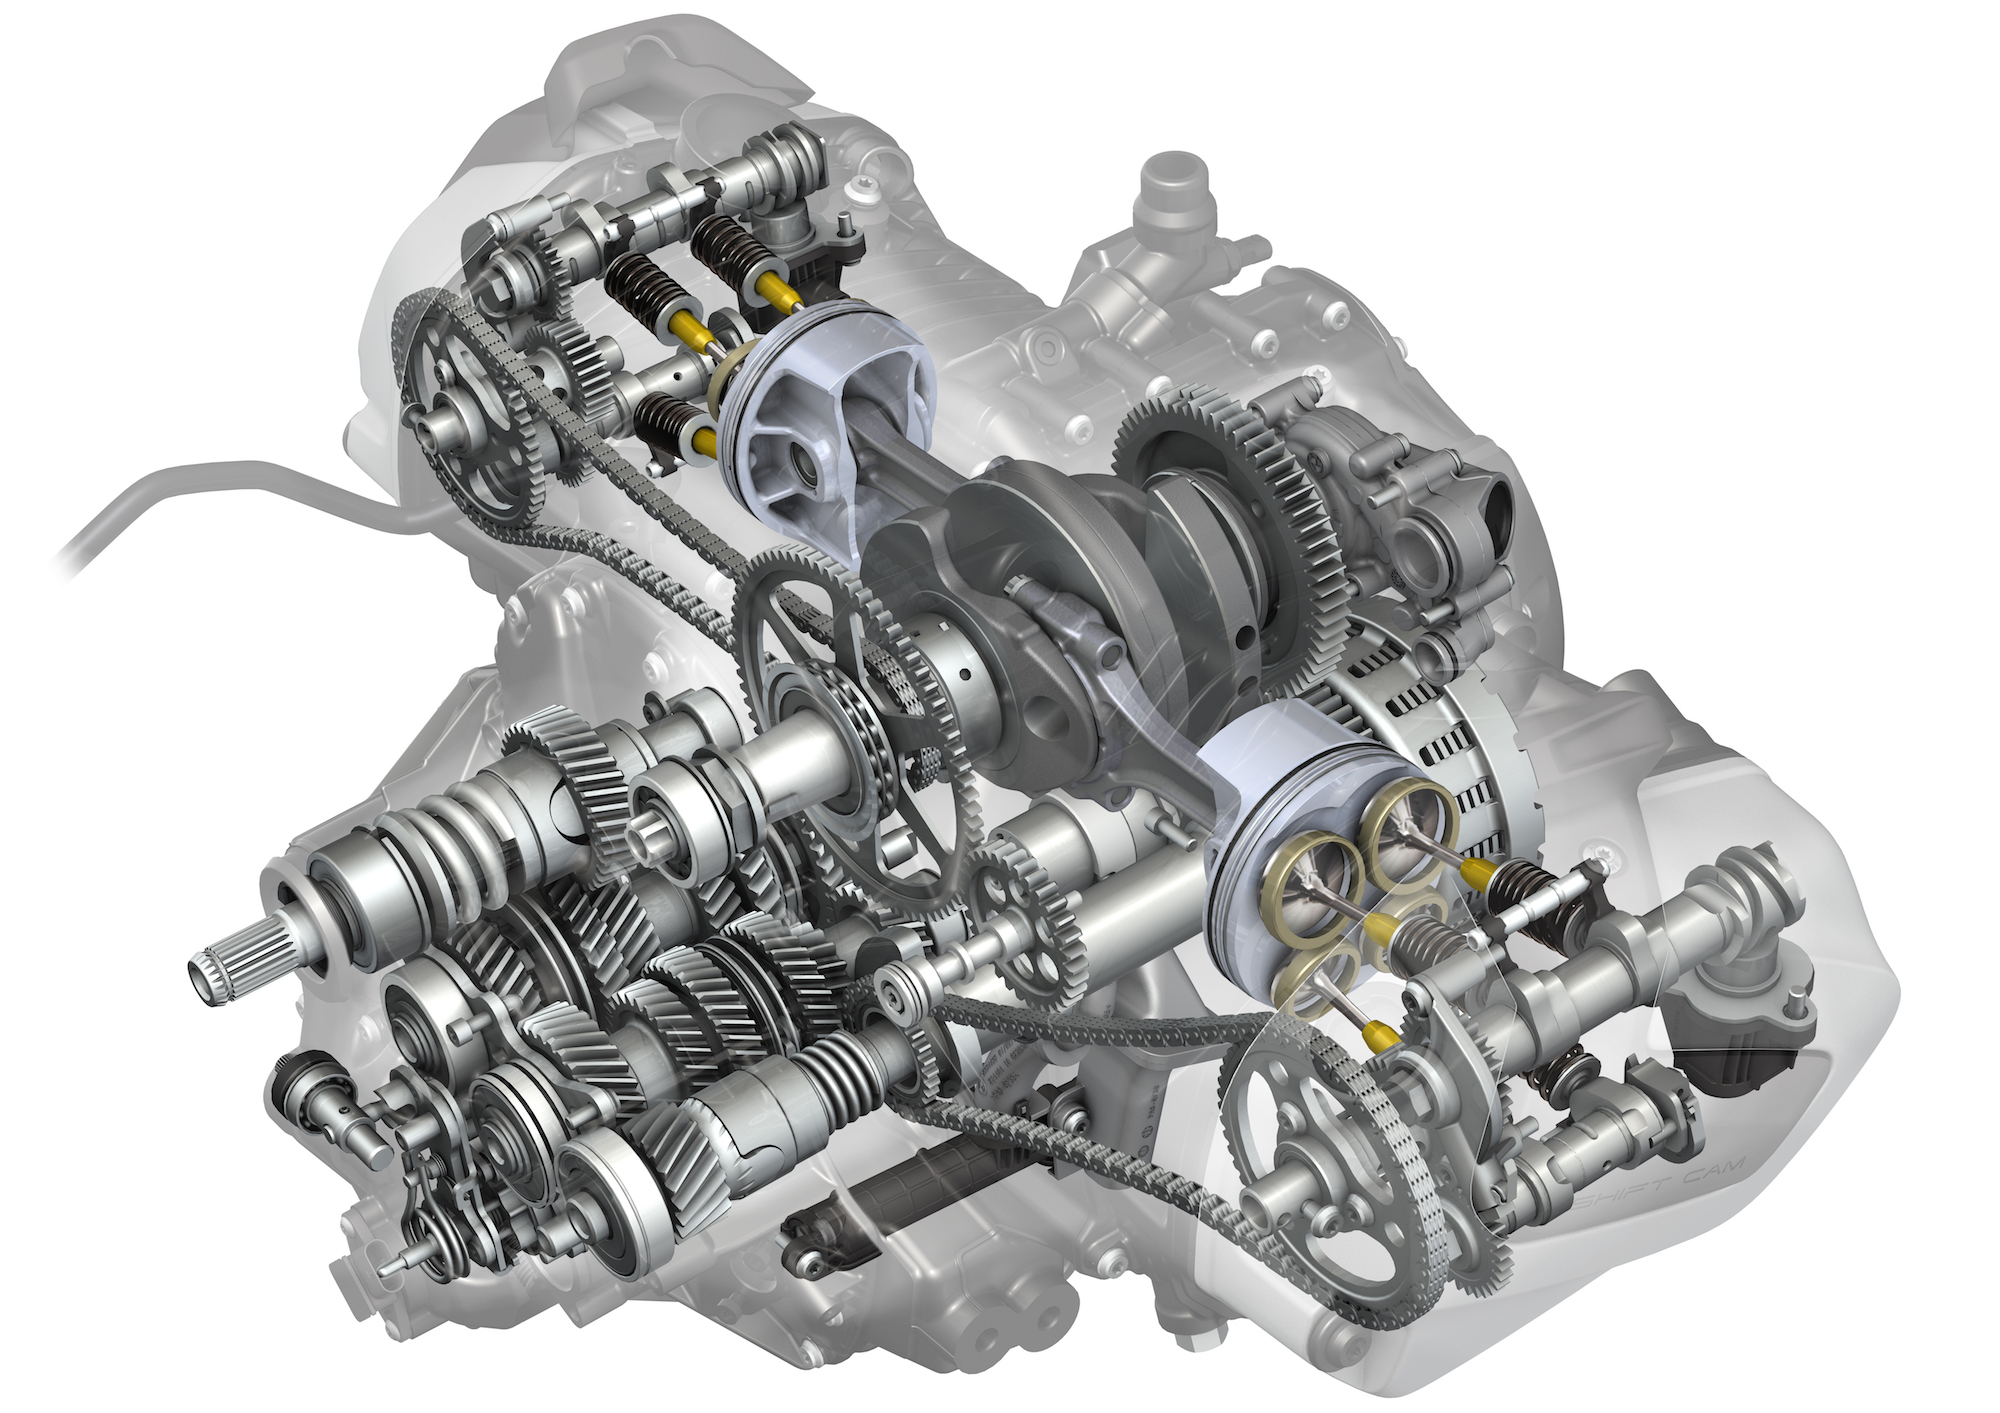 2019 R1250 GS ShiftCam engine